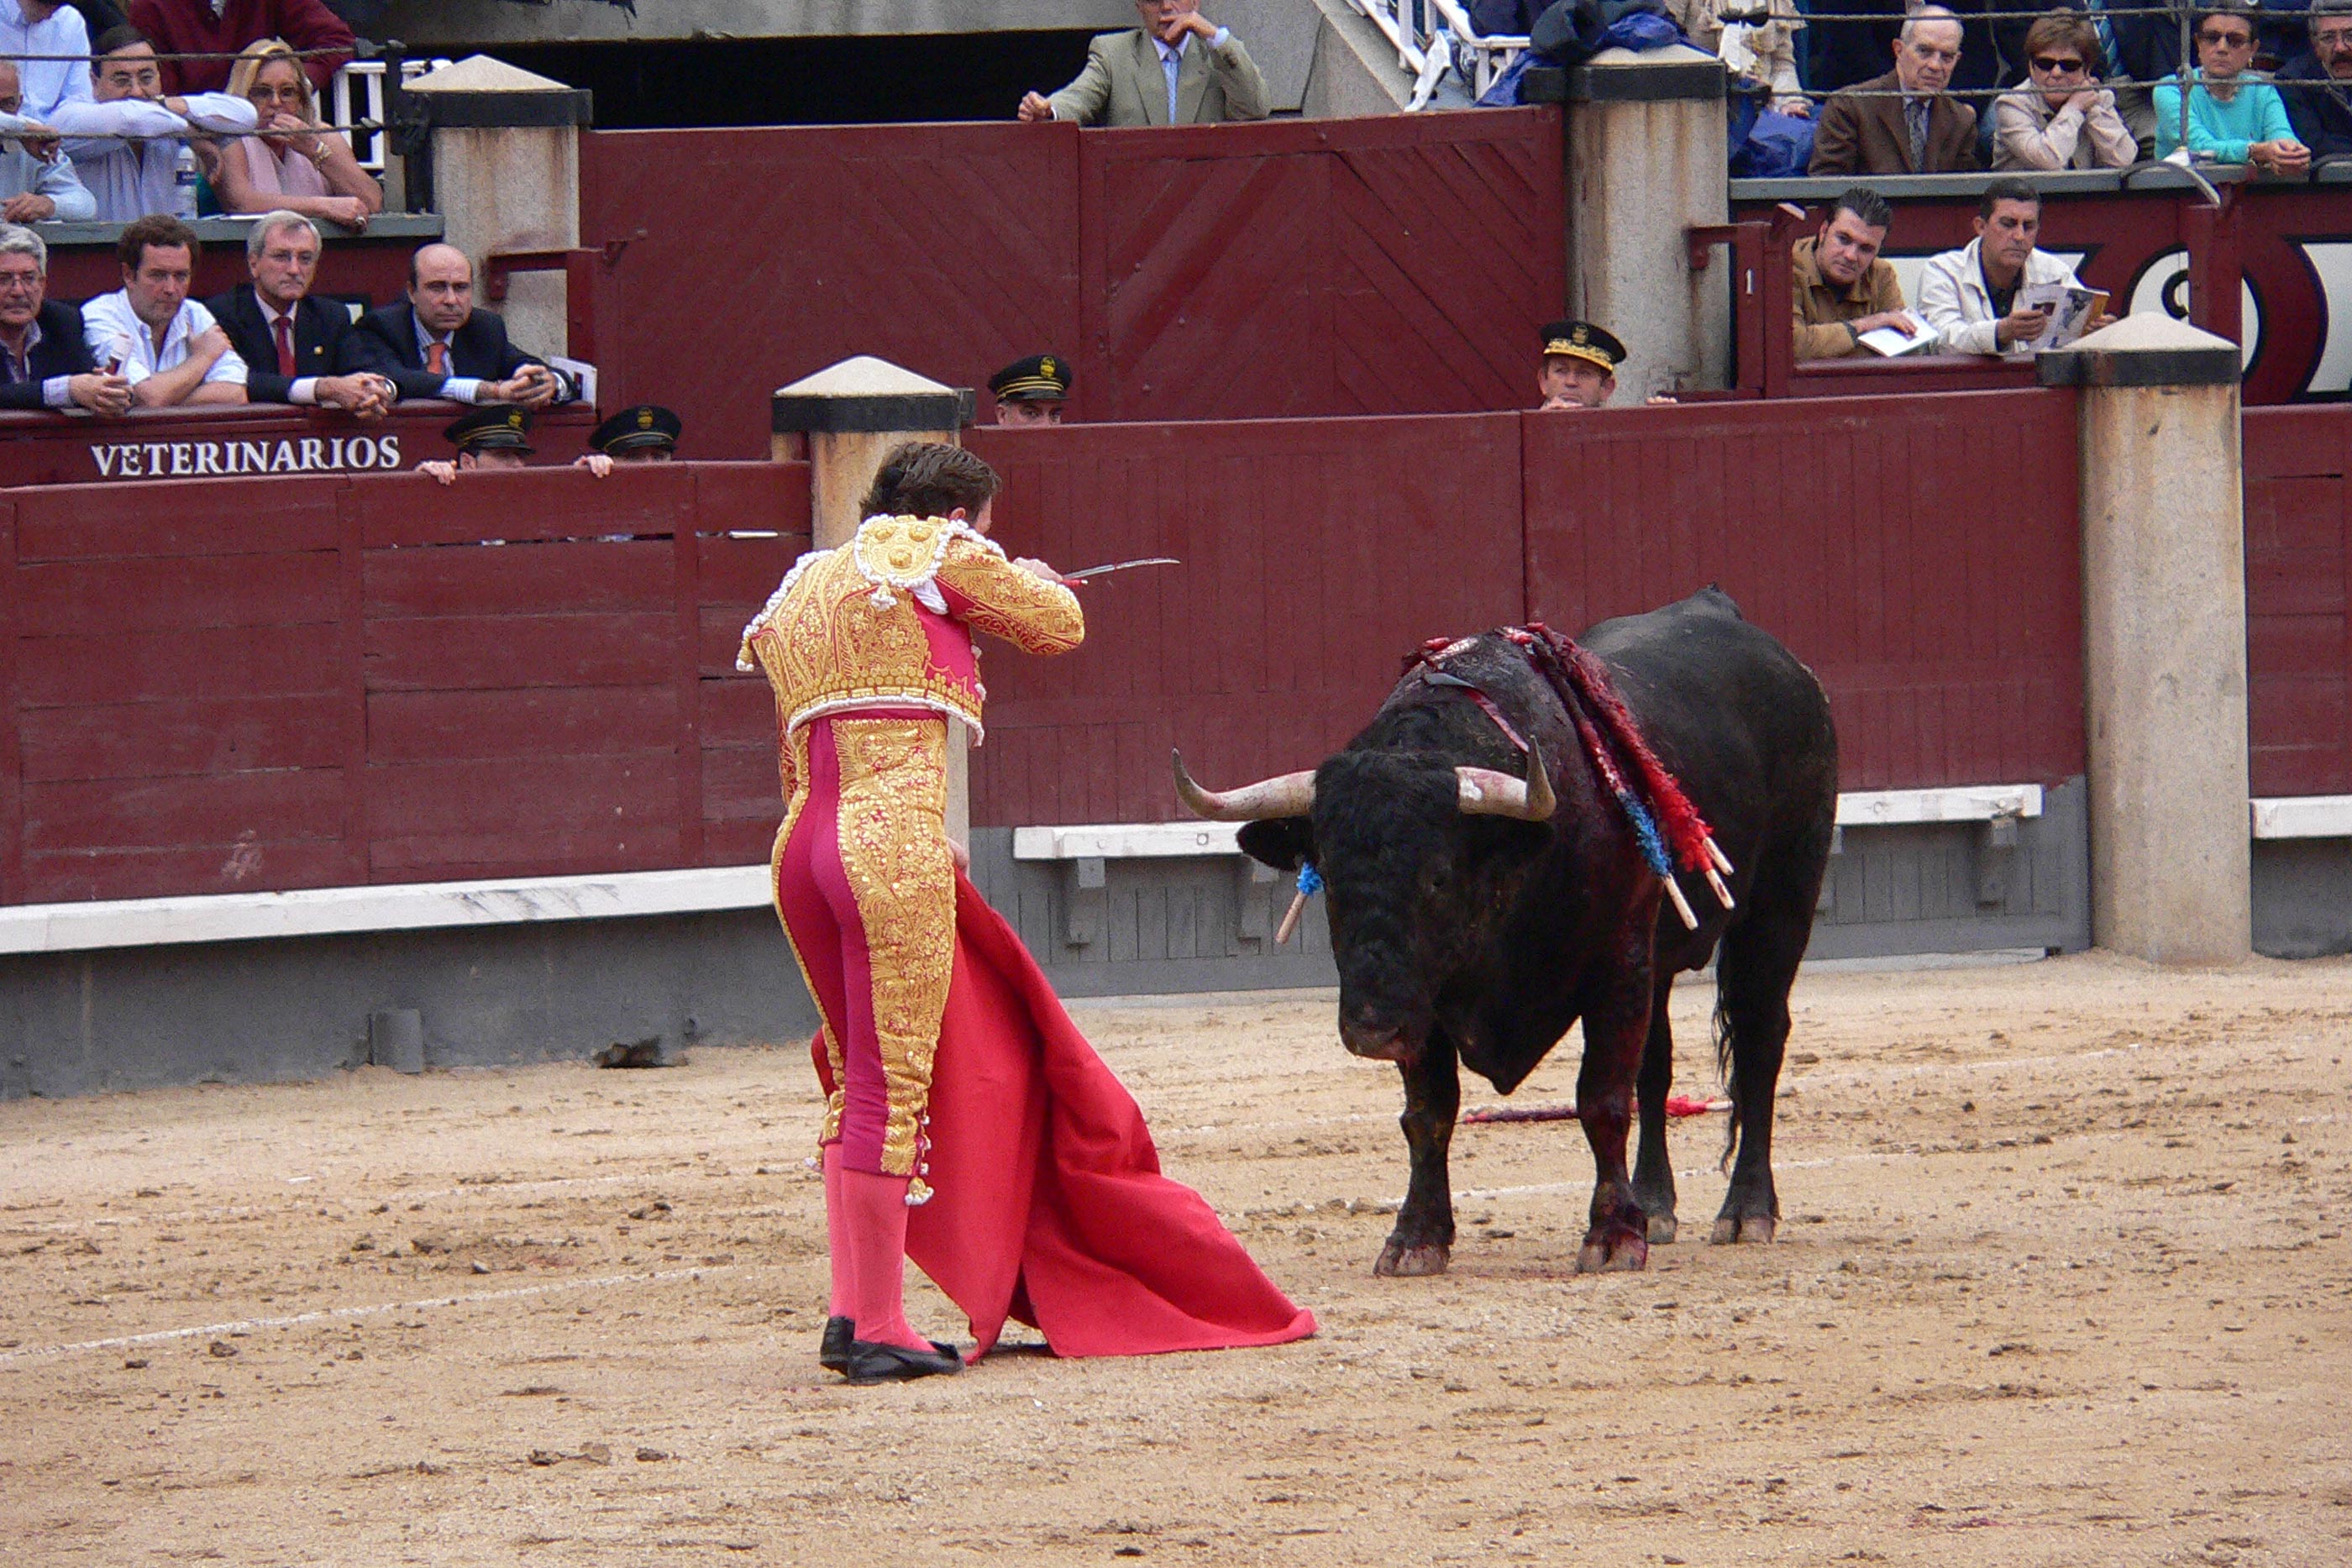 Um toureiro a meio do espétaculo ( "Matador" by Manuel González Olaechea y Franco, Wikipedia is in the Public Domain, CC0) 